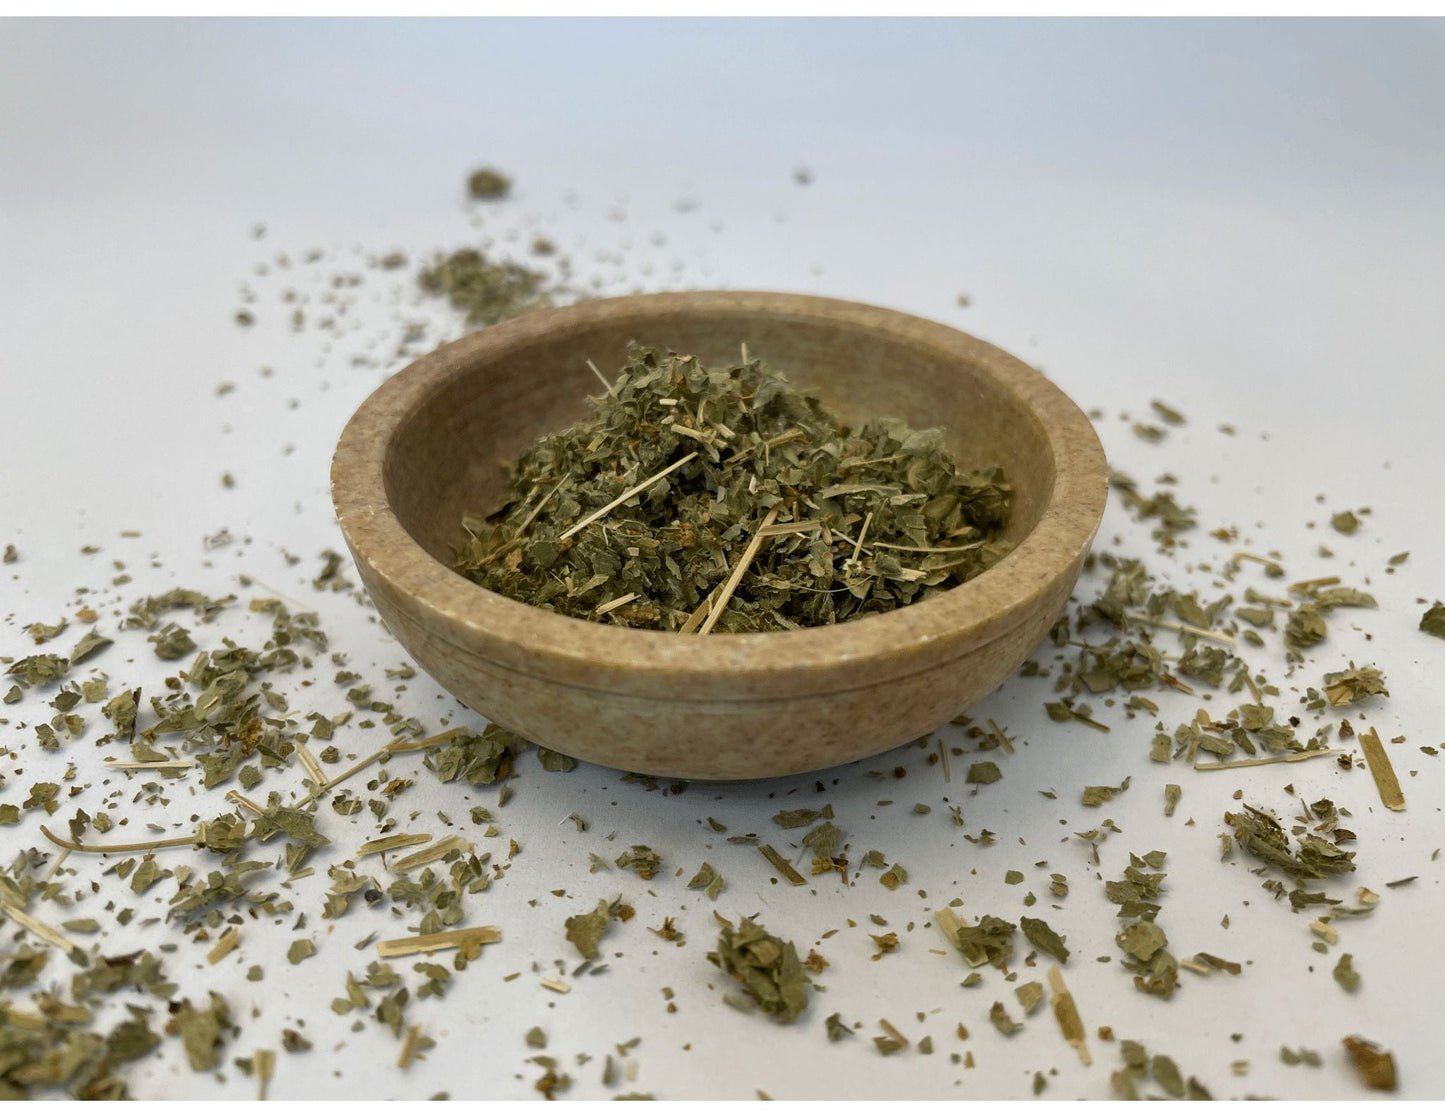 Lady's Mantle Herb - Alchemilla mollis / vulgaris (aerial parts)